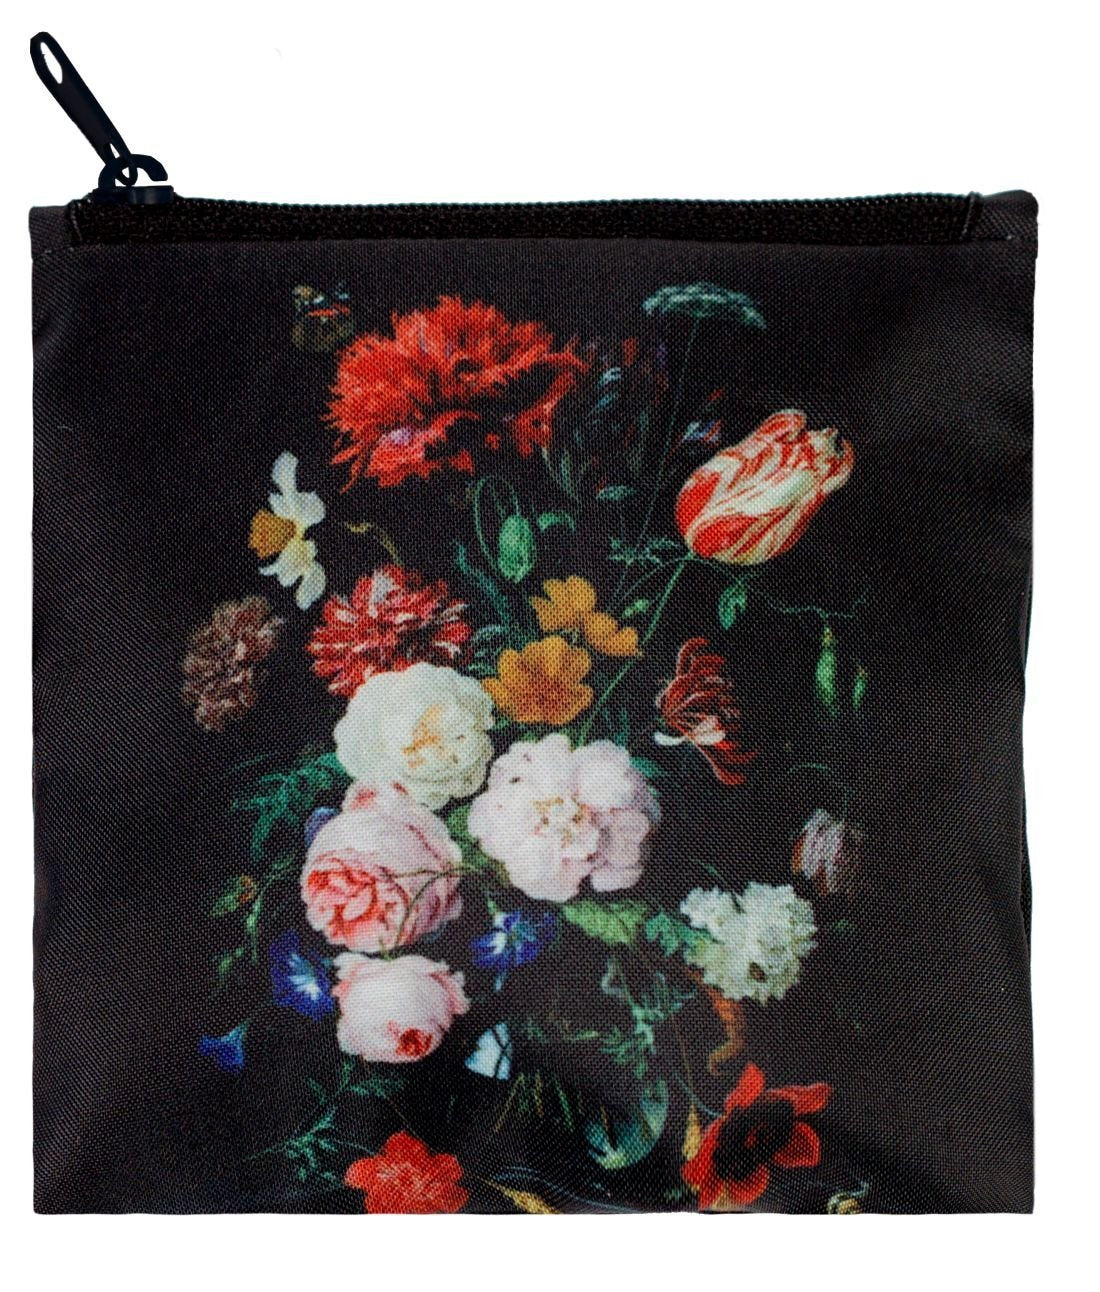 LOQI Museum Jan Davidsz de Heem's Still Life with Flowers in a Glass Vase Reusable Shopping Bag